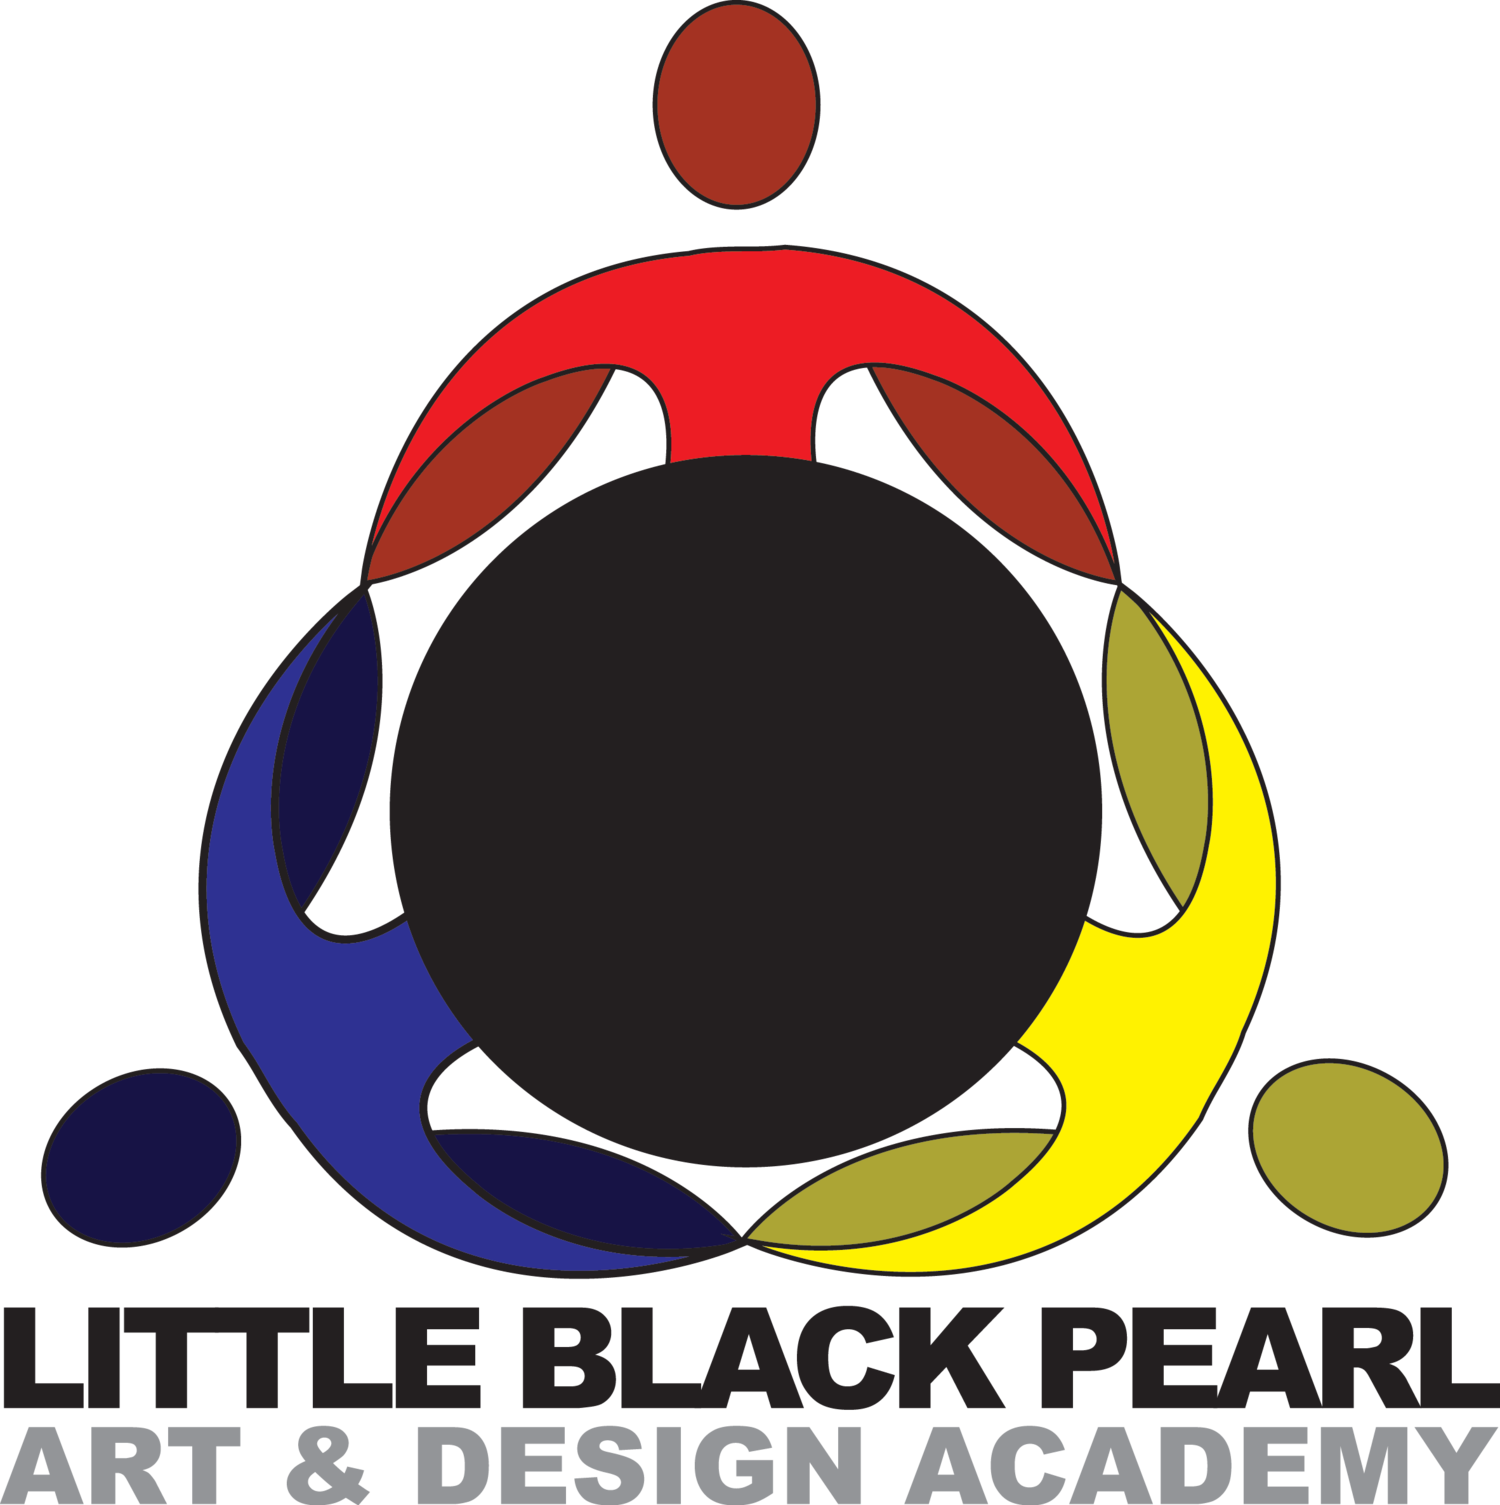 Little Black Pearl Art & Design Academy